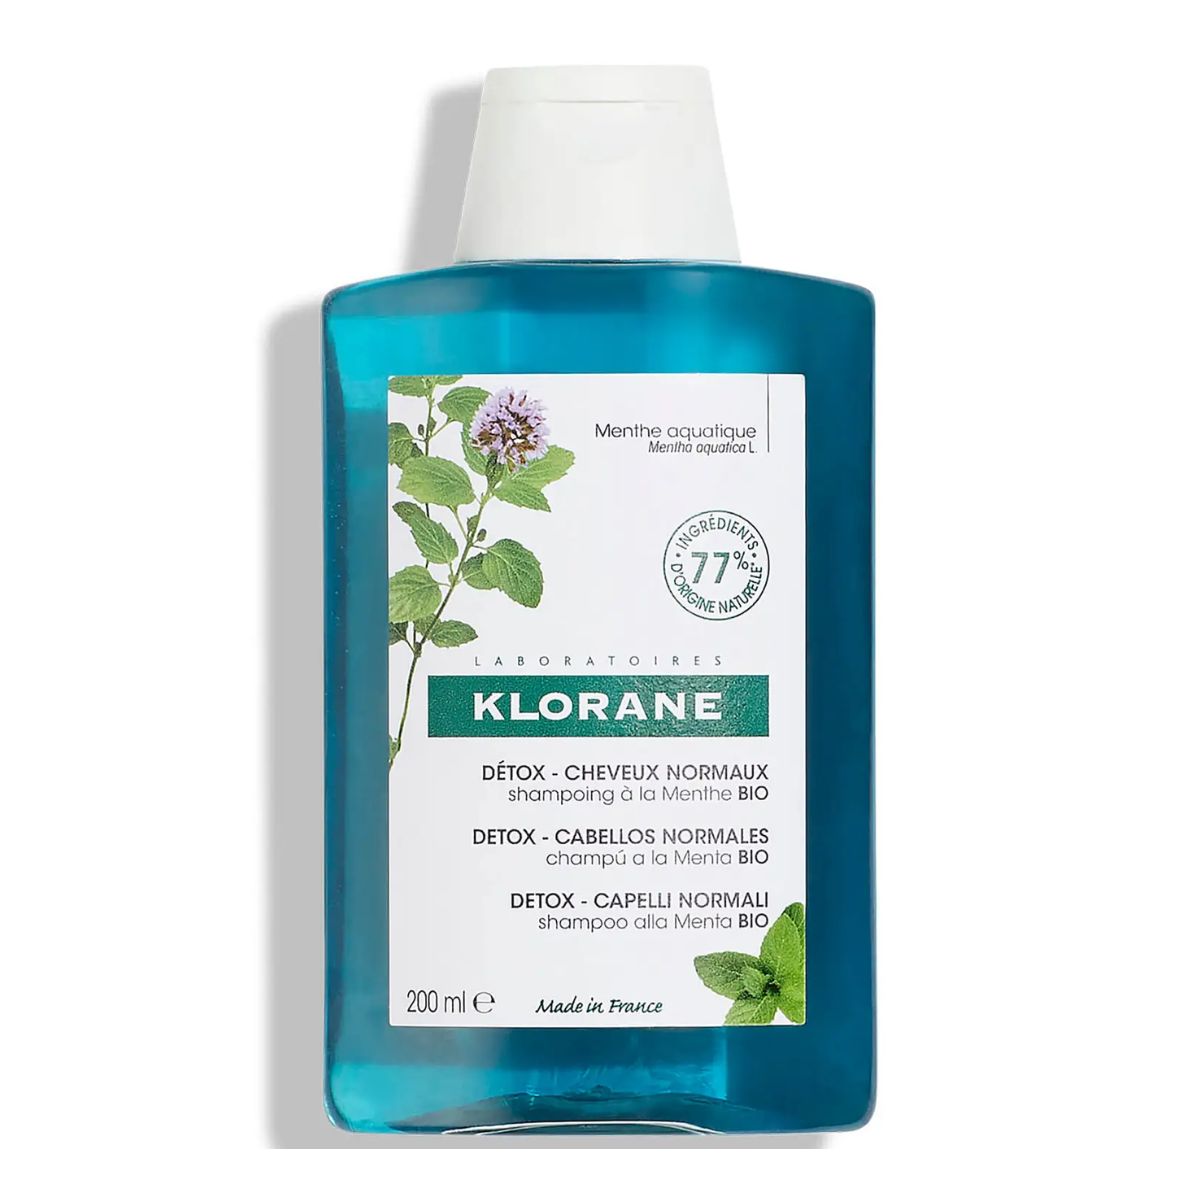 Klorane Detox Shampoo with Organic Mint